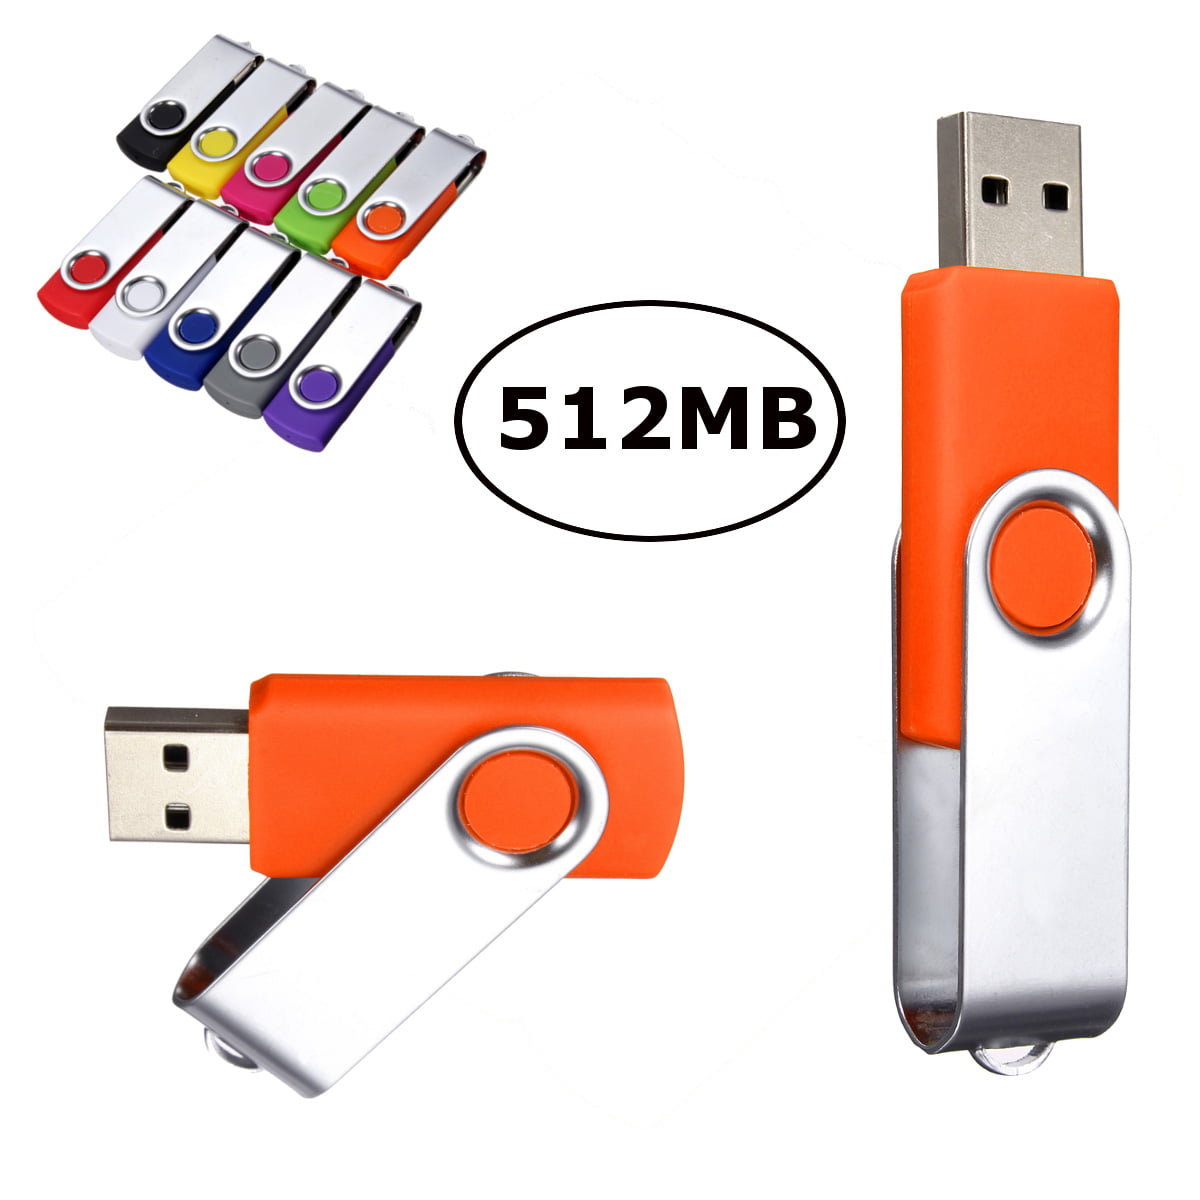 Bulk USB 2.0 Thumb Drives Swivel Memory Stick Jump Drive Pen Drive,256MB 100 Pieces USB Flash Drive 256MB 100 Pack